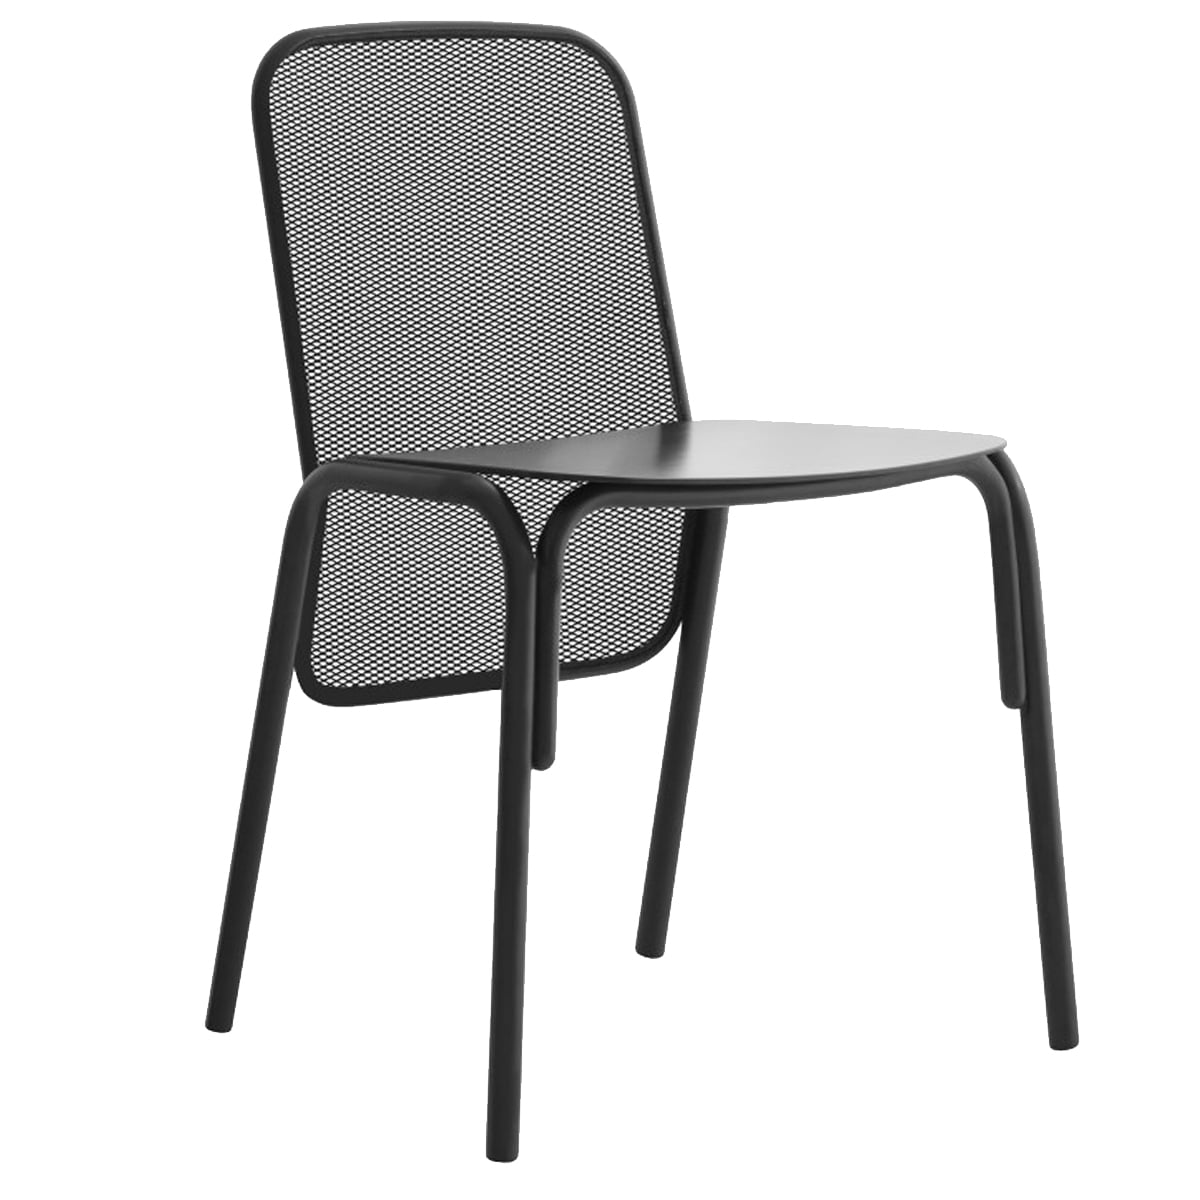 Neo 100362e Perforated Sheet Metal Garden Chair Neo Horeca Furniture